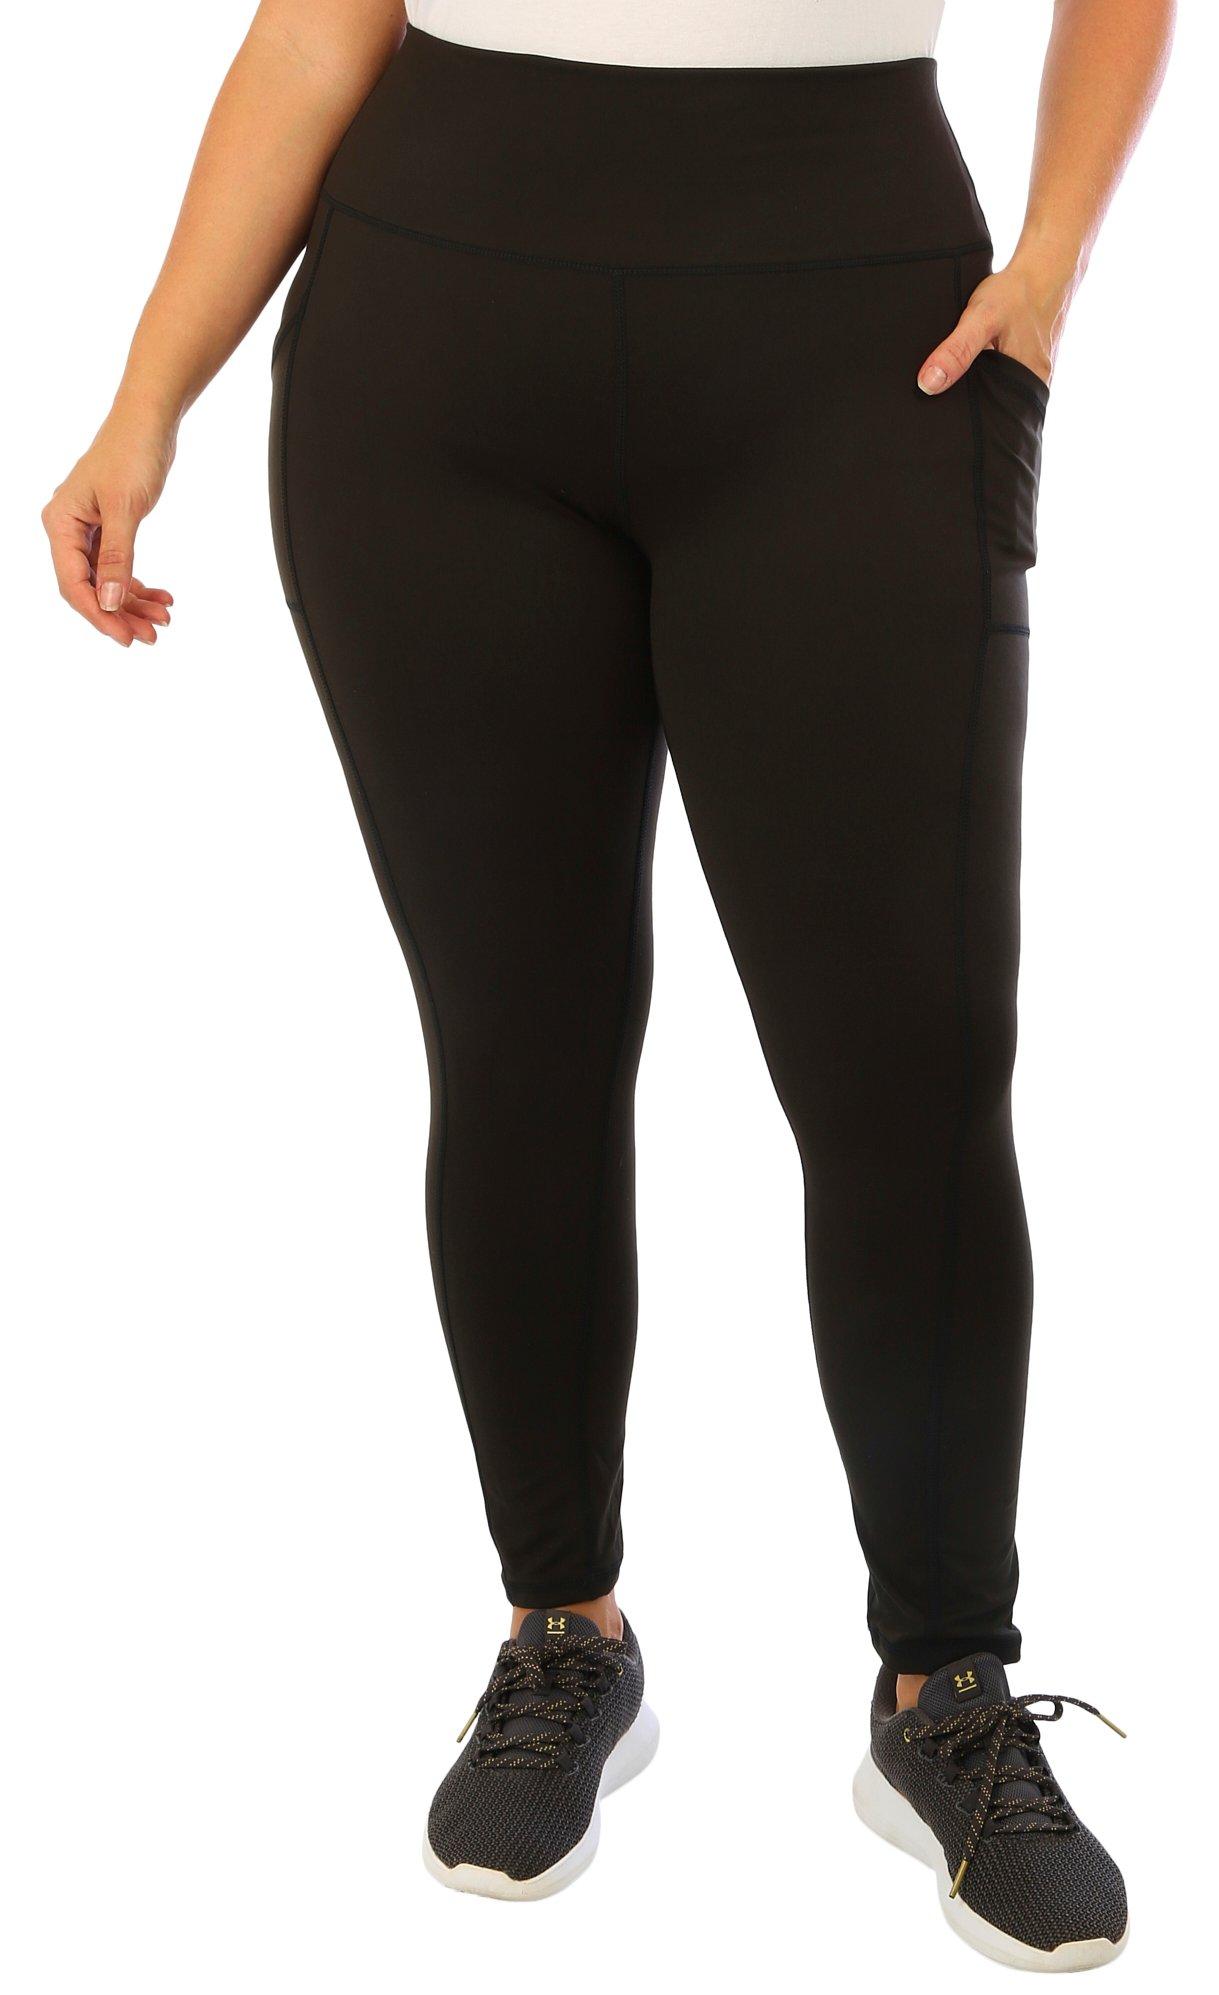 Vogo Athletics Women's leggings Gray/Black Striped Mesh Sides Size